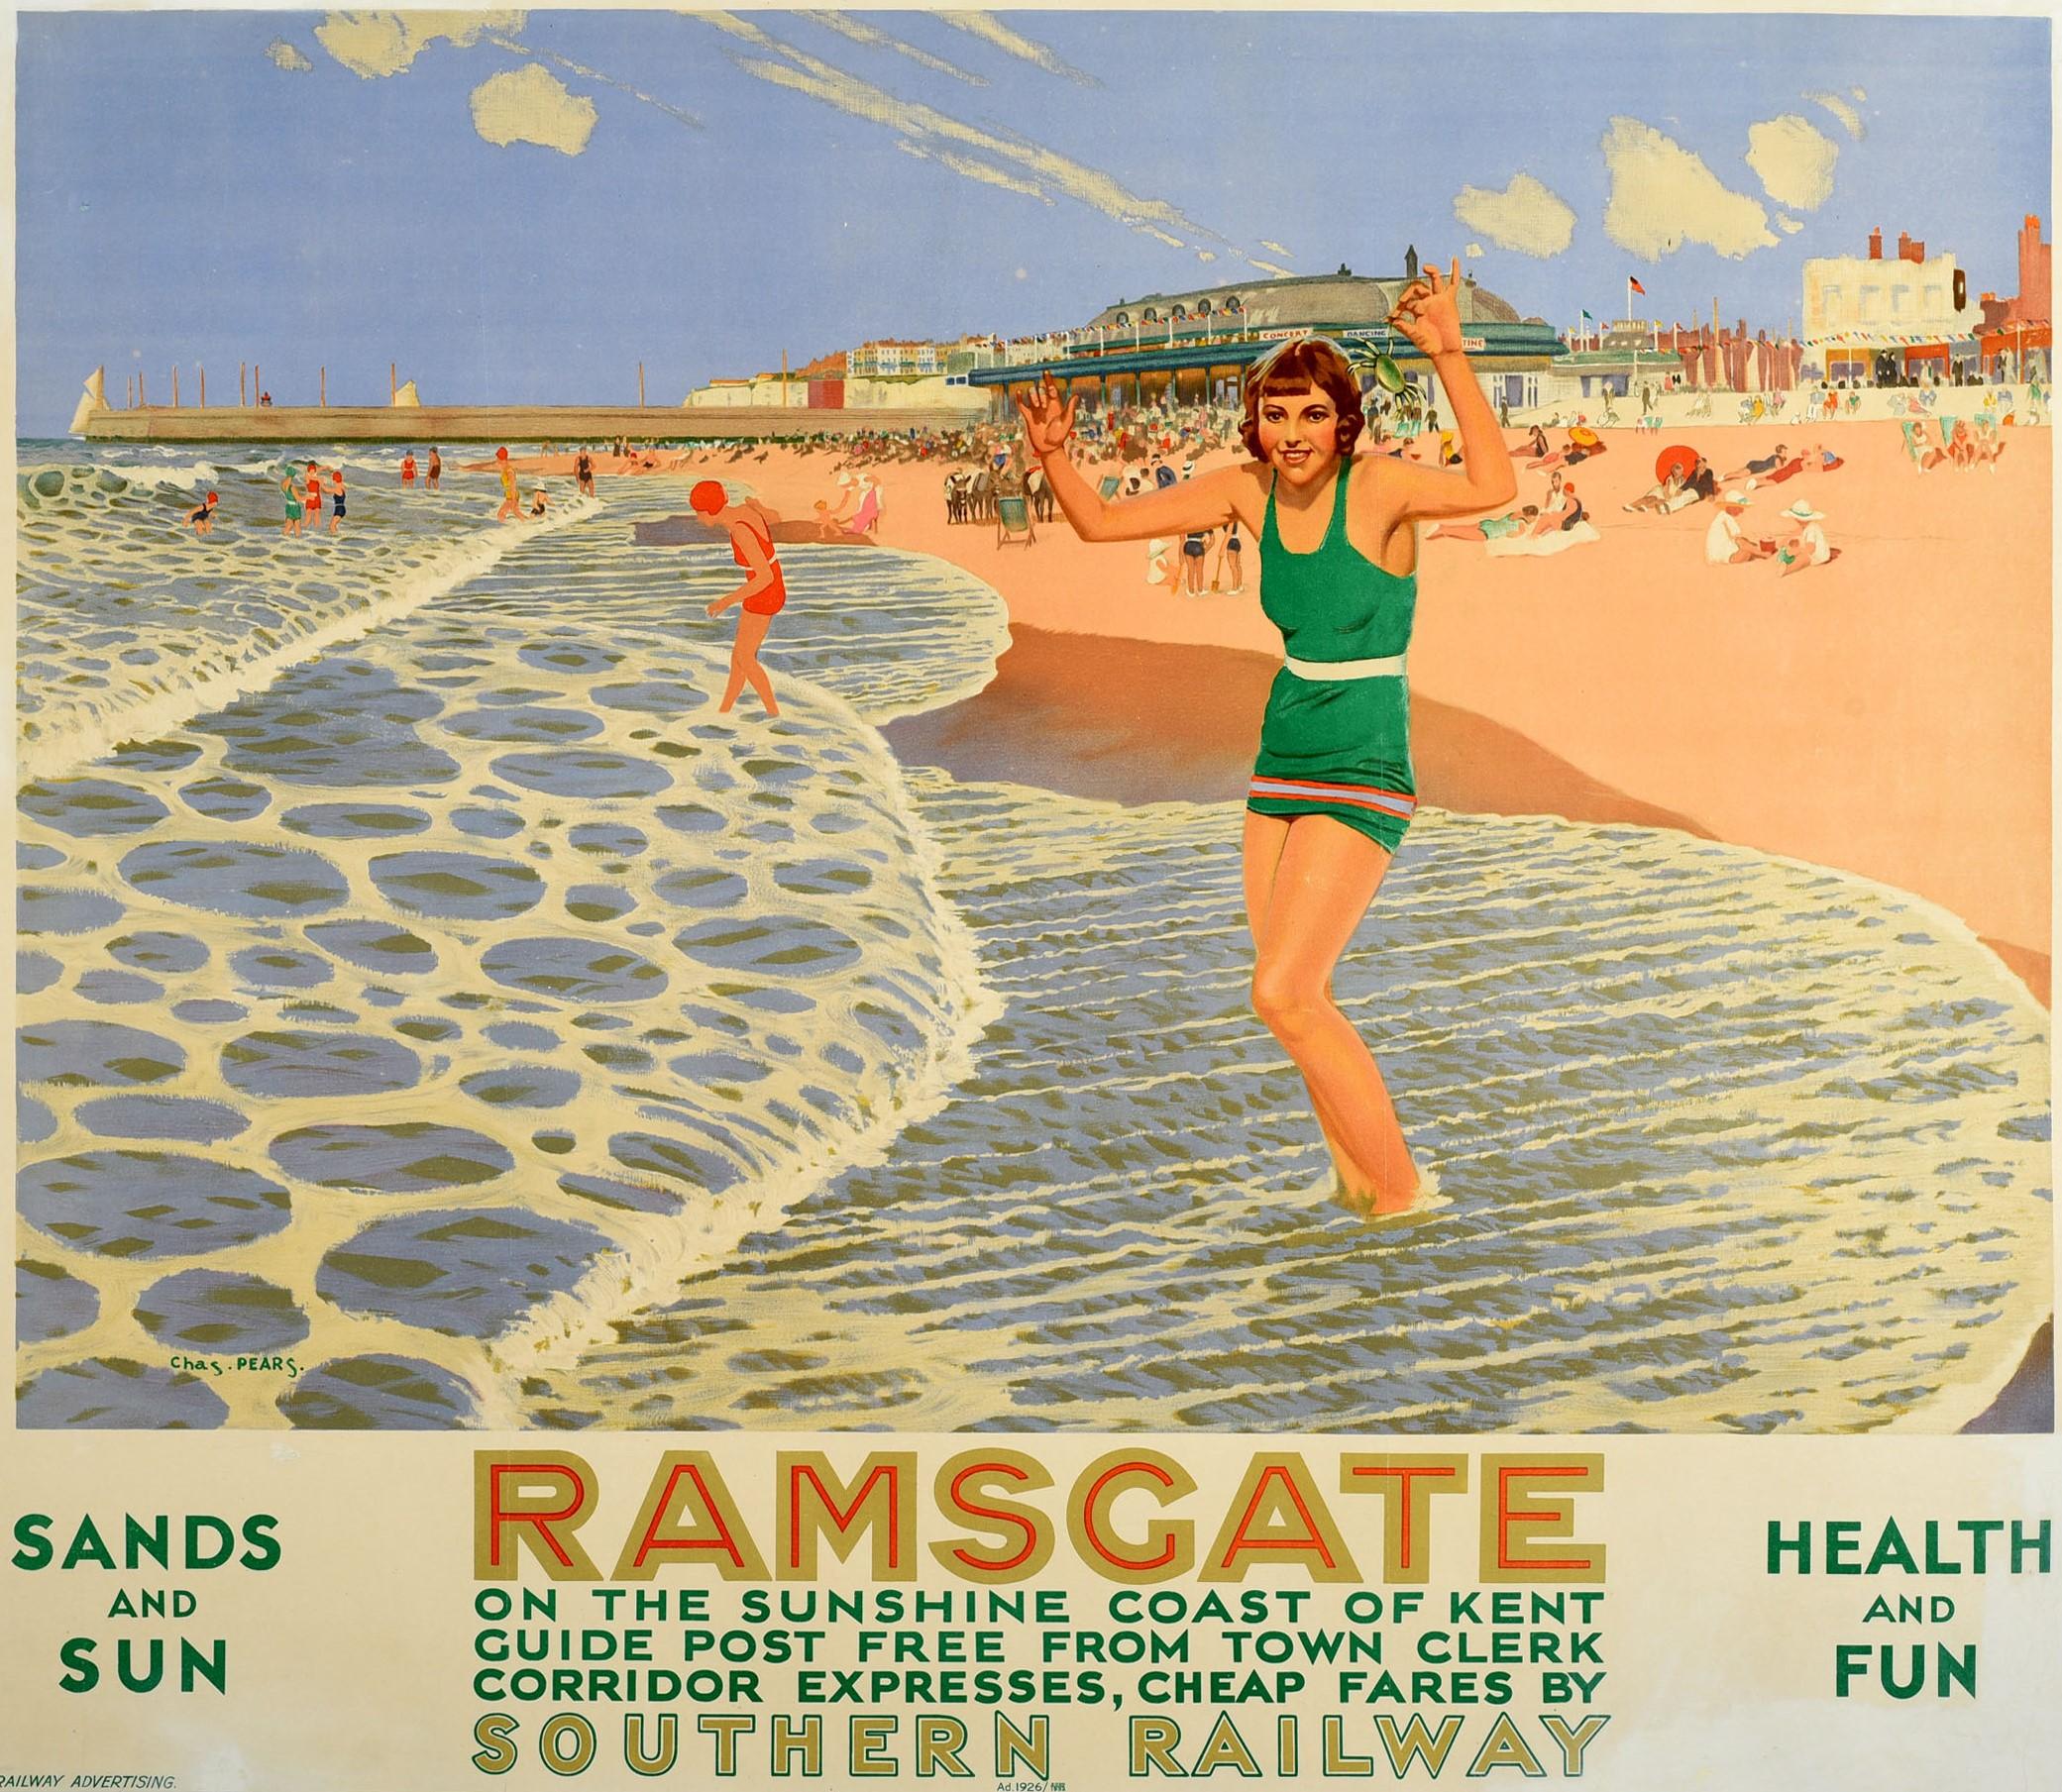 Original Vintage Railway Poster Ramsgate Main Sands Sun Health Fun Coast Travel - Beige Print by Charles Pears